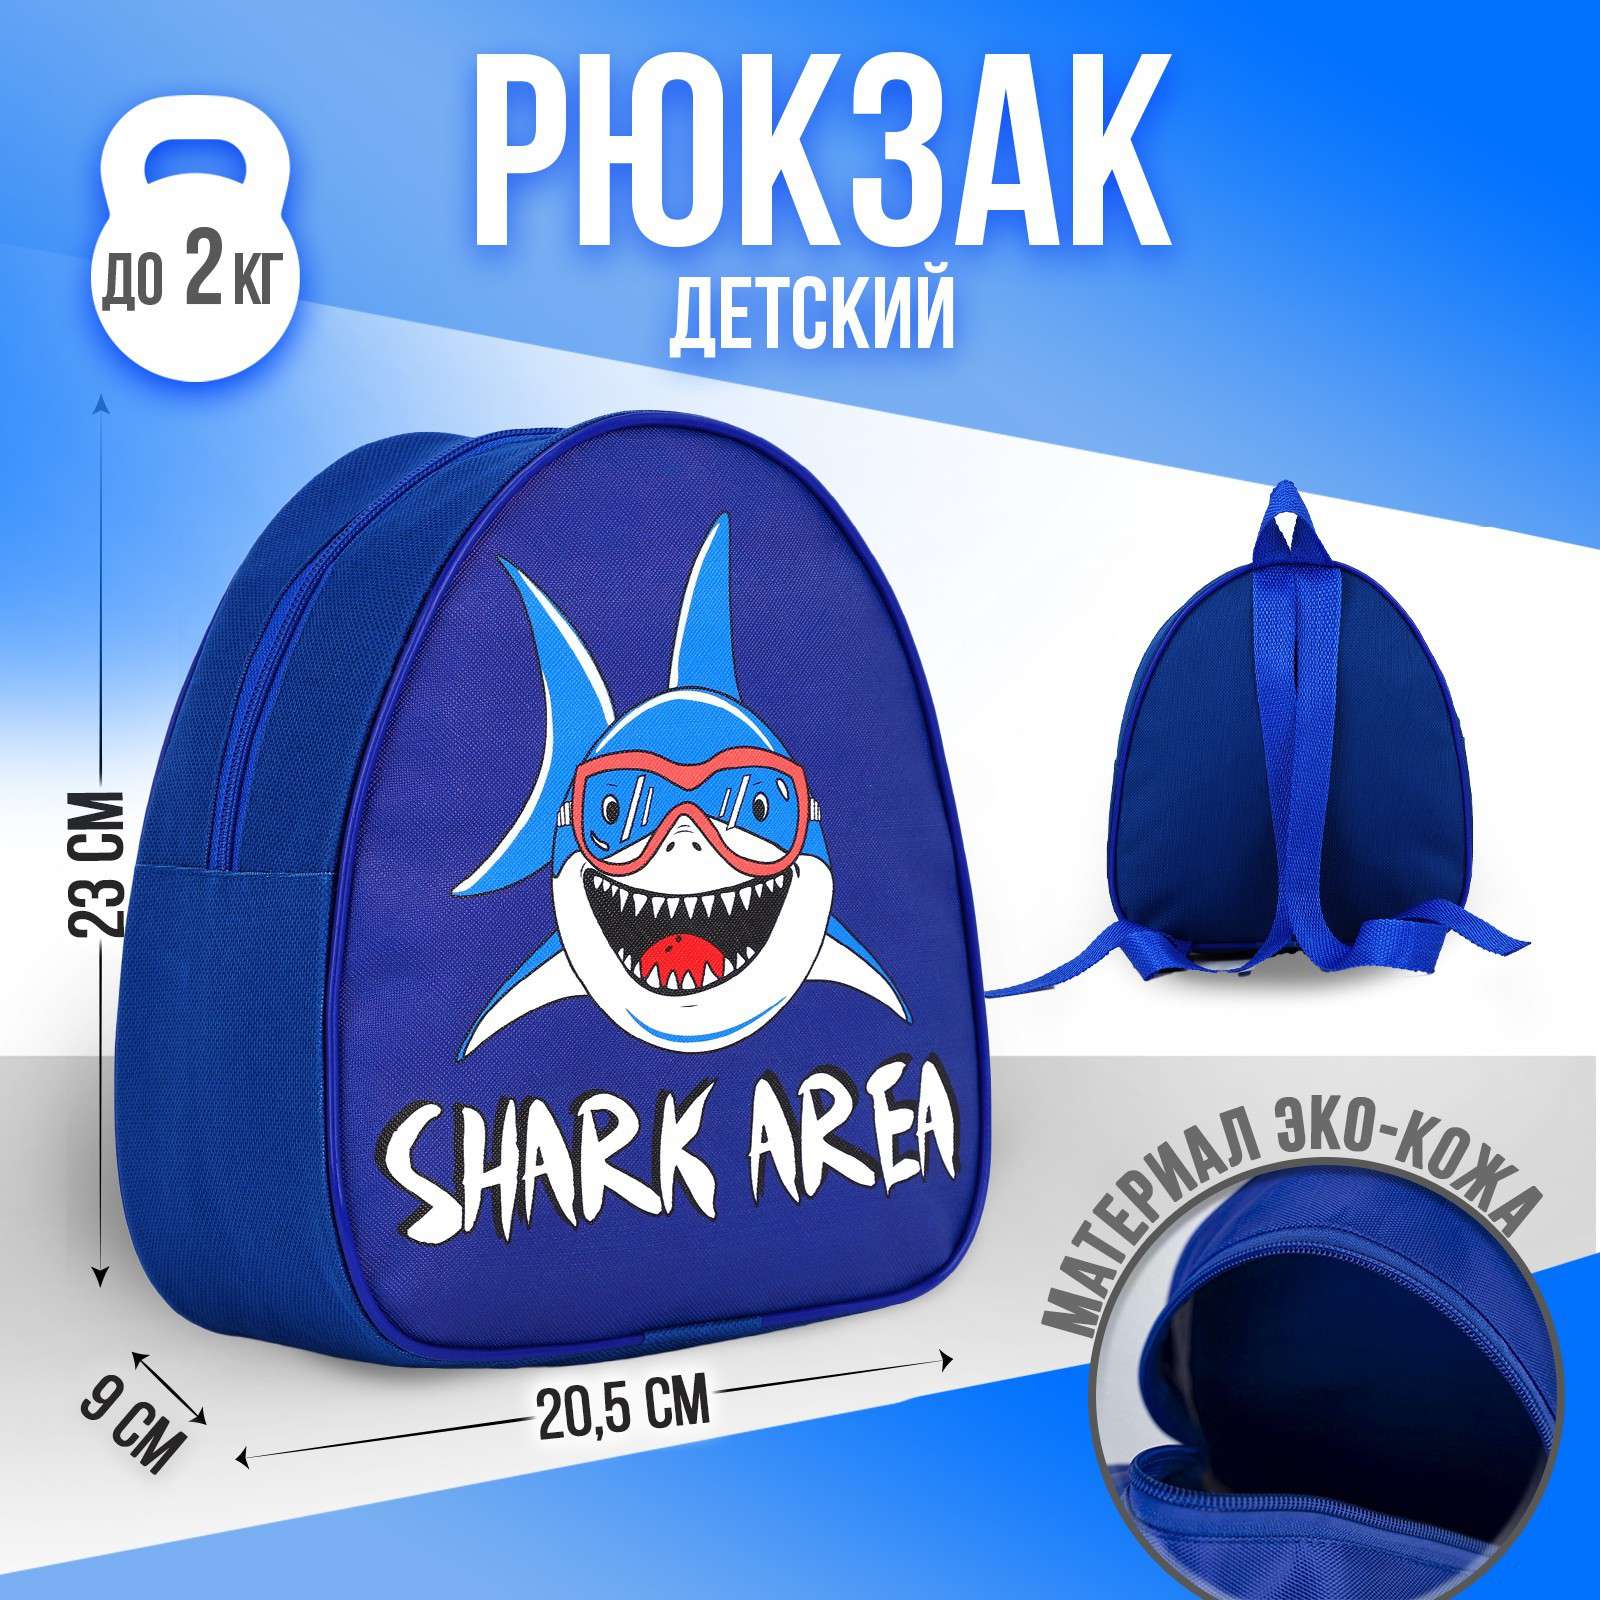 Рюкзак детский 9302250 Зона акул - Пермь 